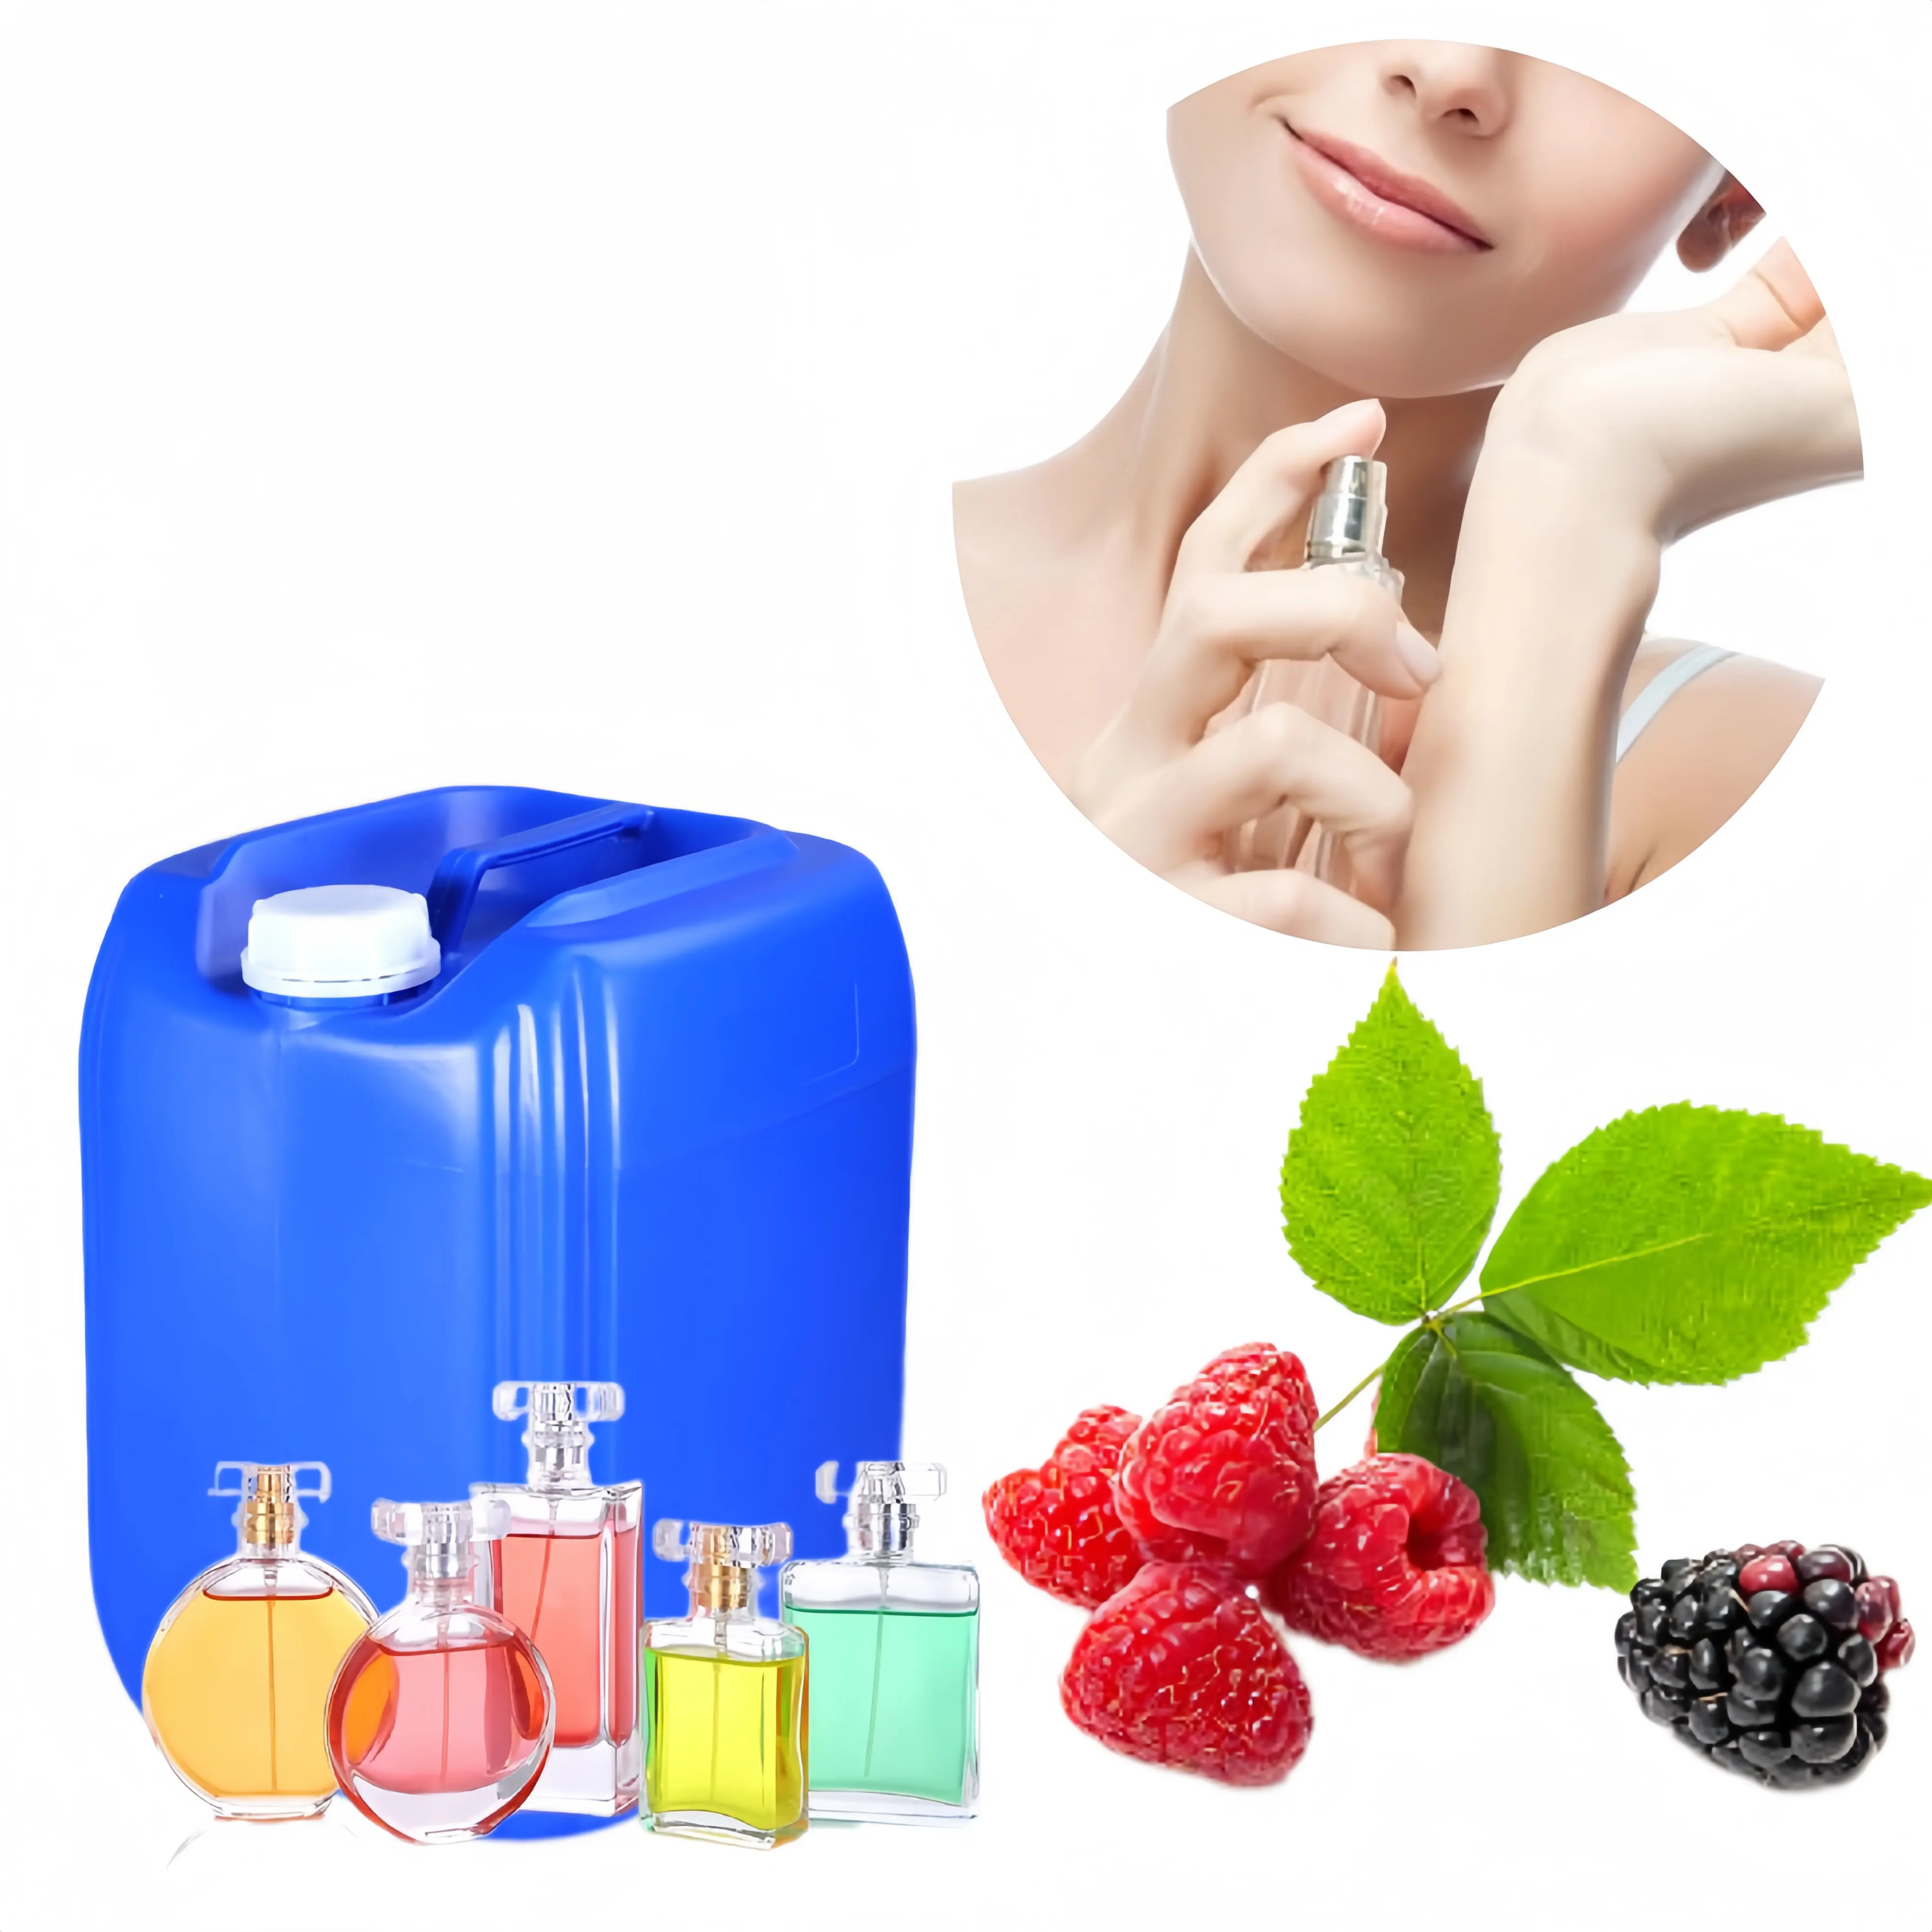 Wholesale kinds famous brands concentrated perfume oils fragrance for designer perfume oils fragrance oils